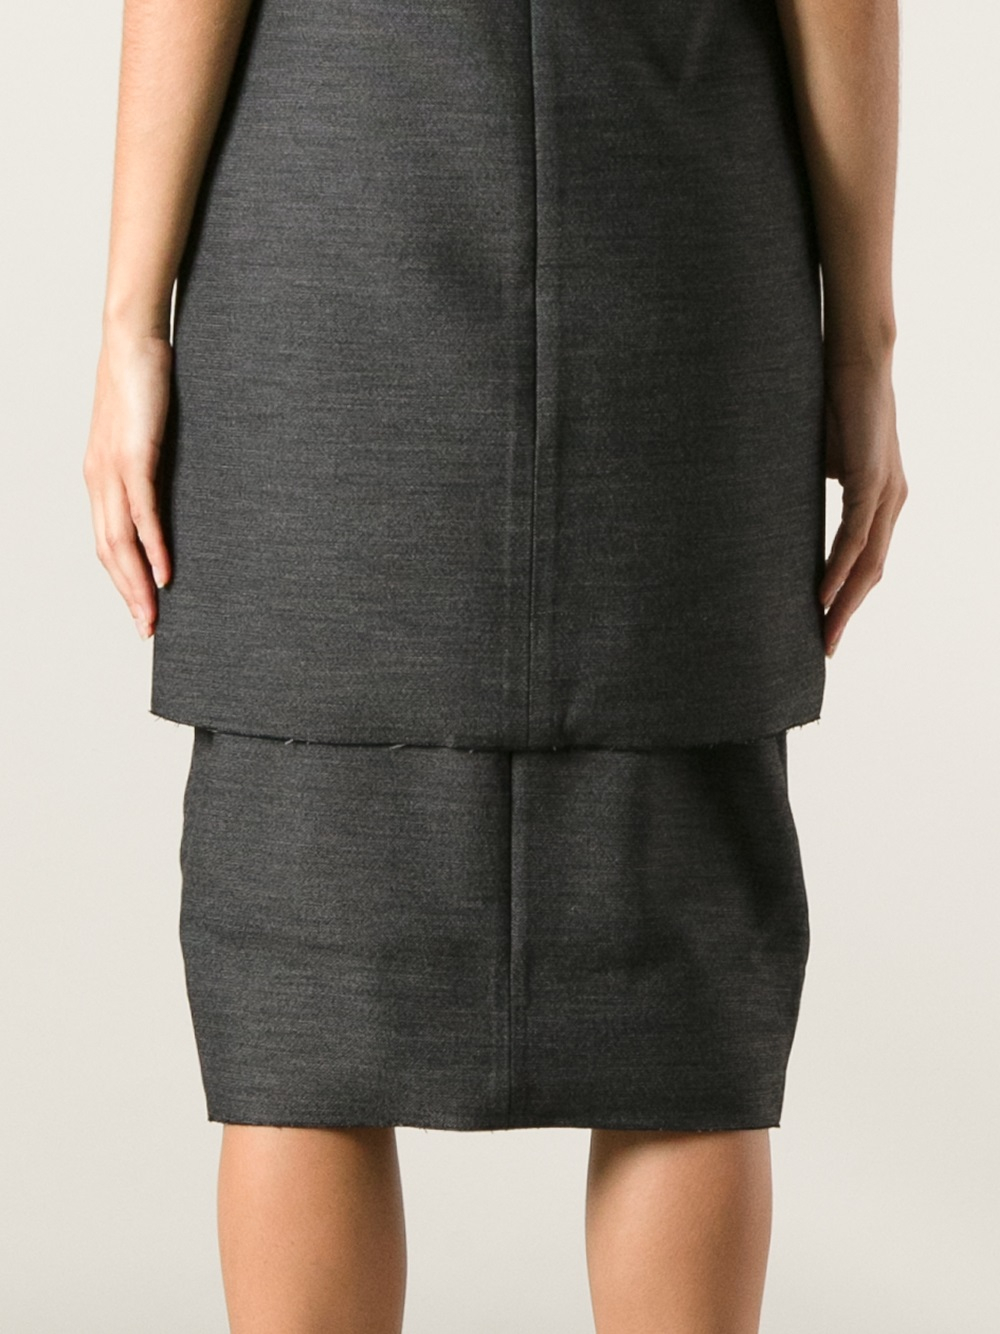 Lyst - Alexander wang Leather Waistband Tulip Skirt in Gray